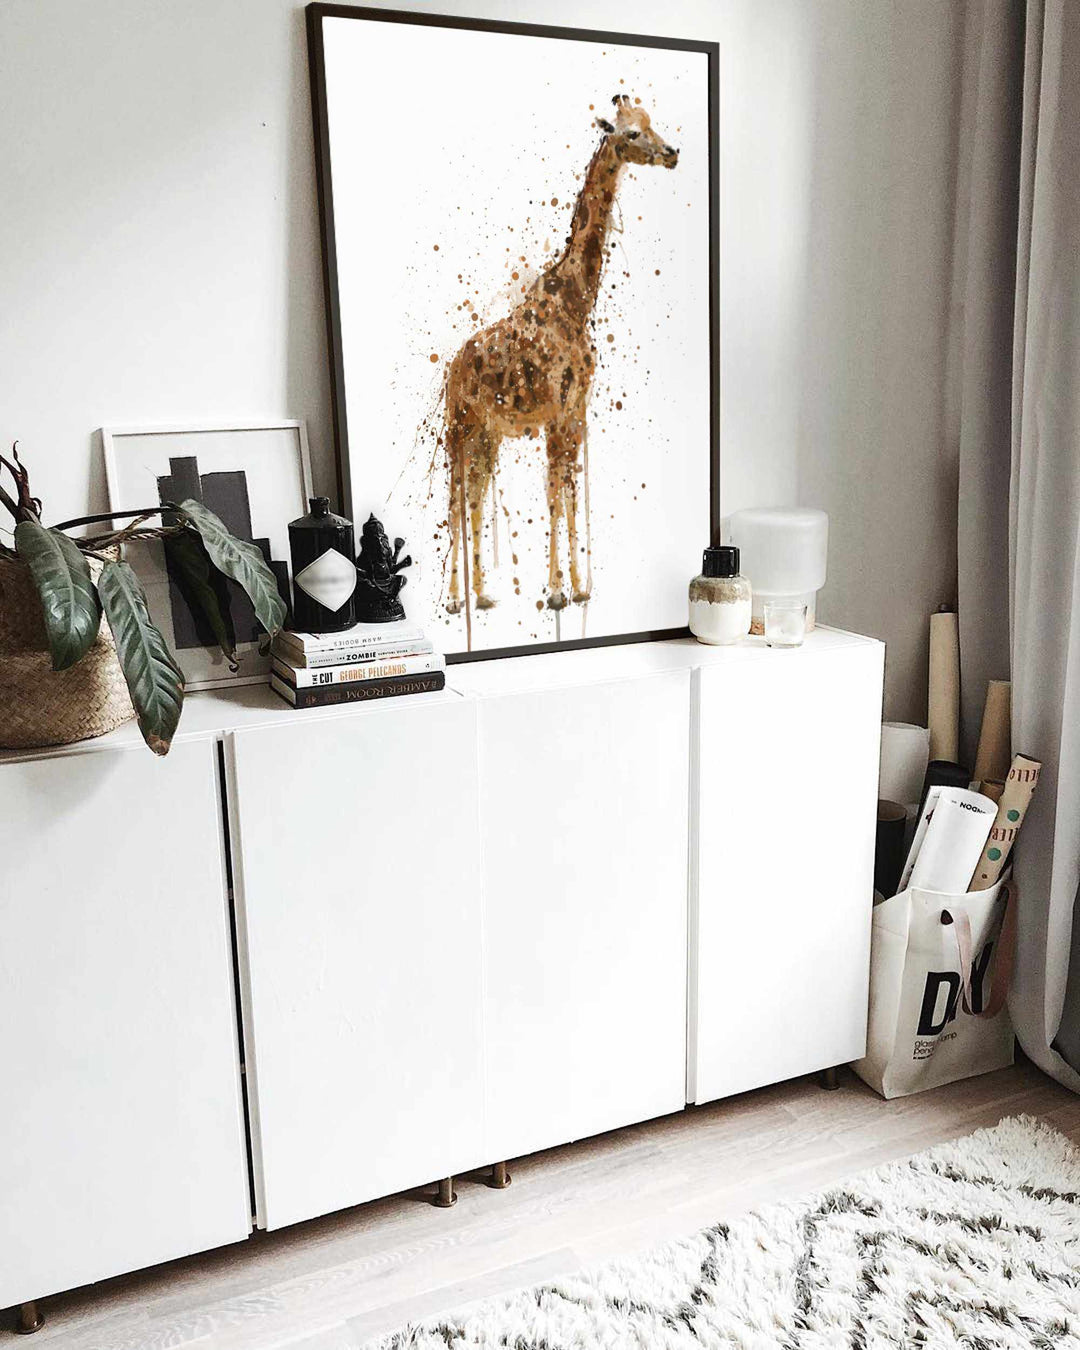 Giraffe Wall Art Print